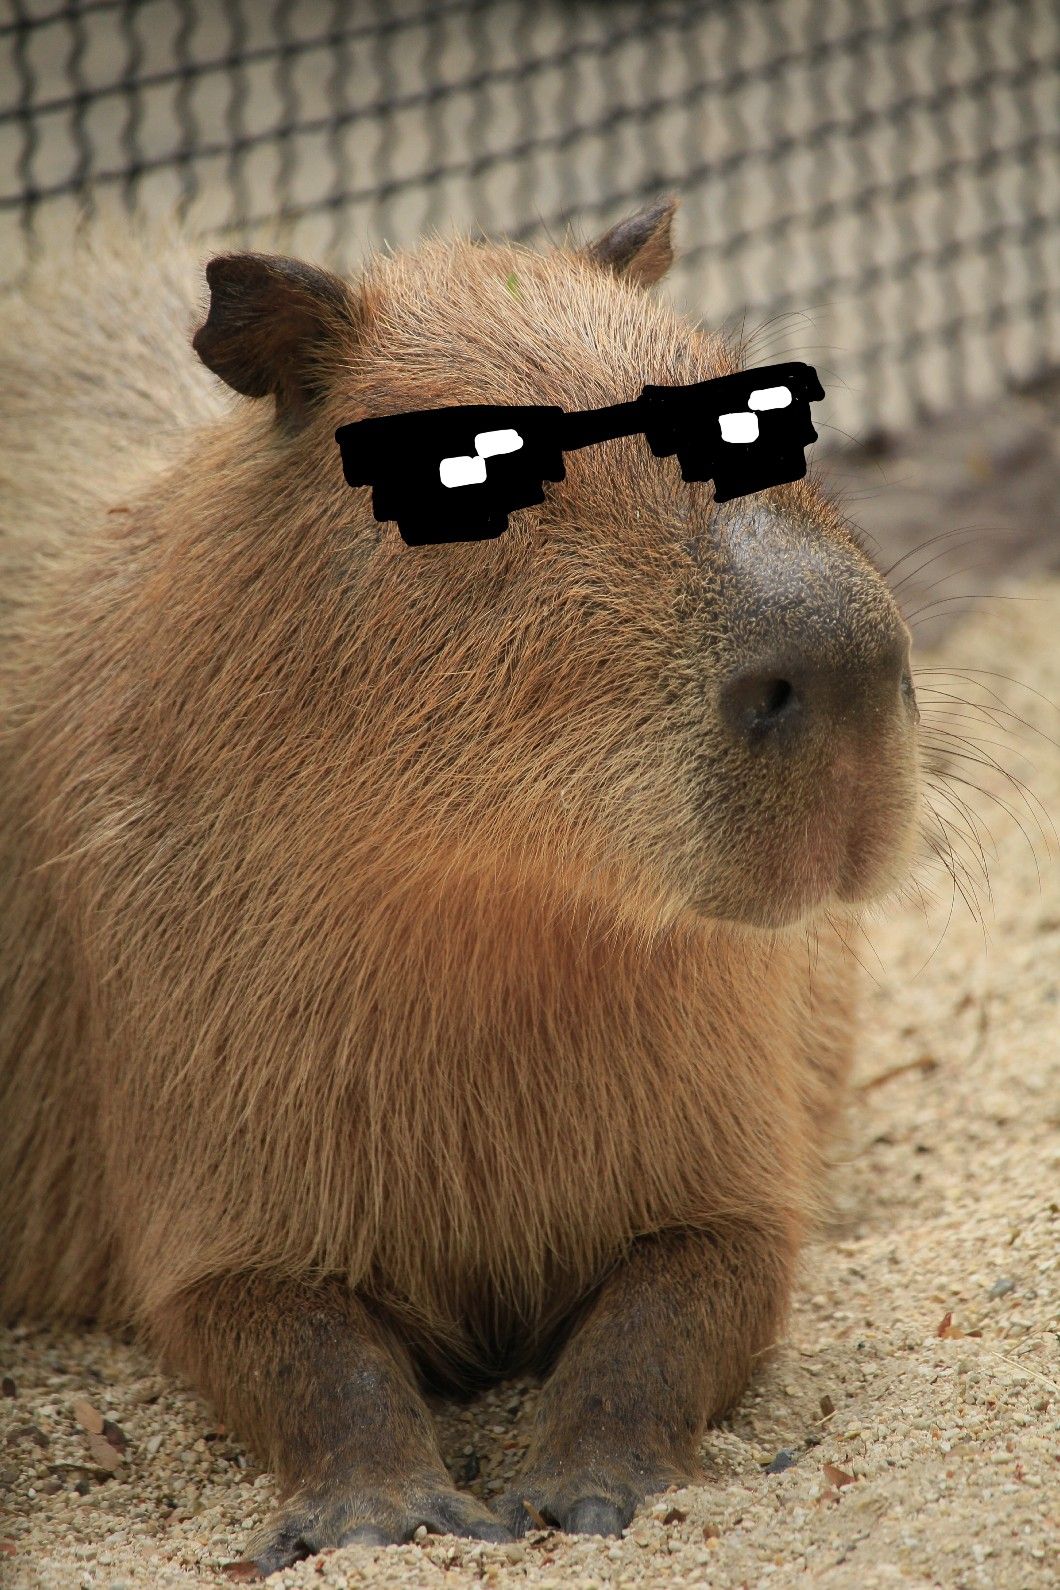 Cool 😎 sunglasses capybara